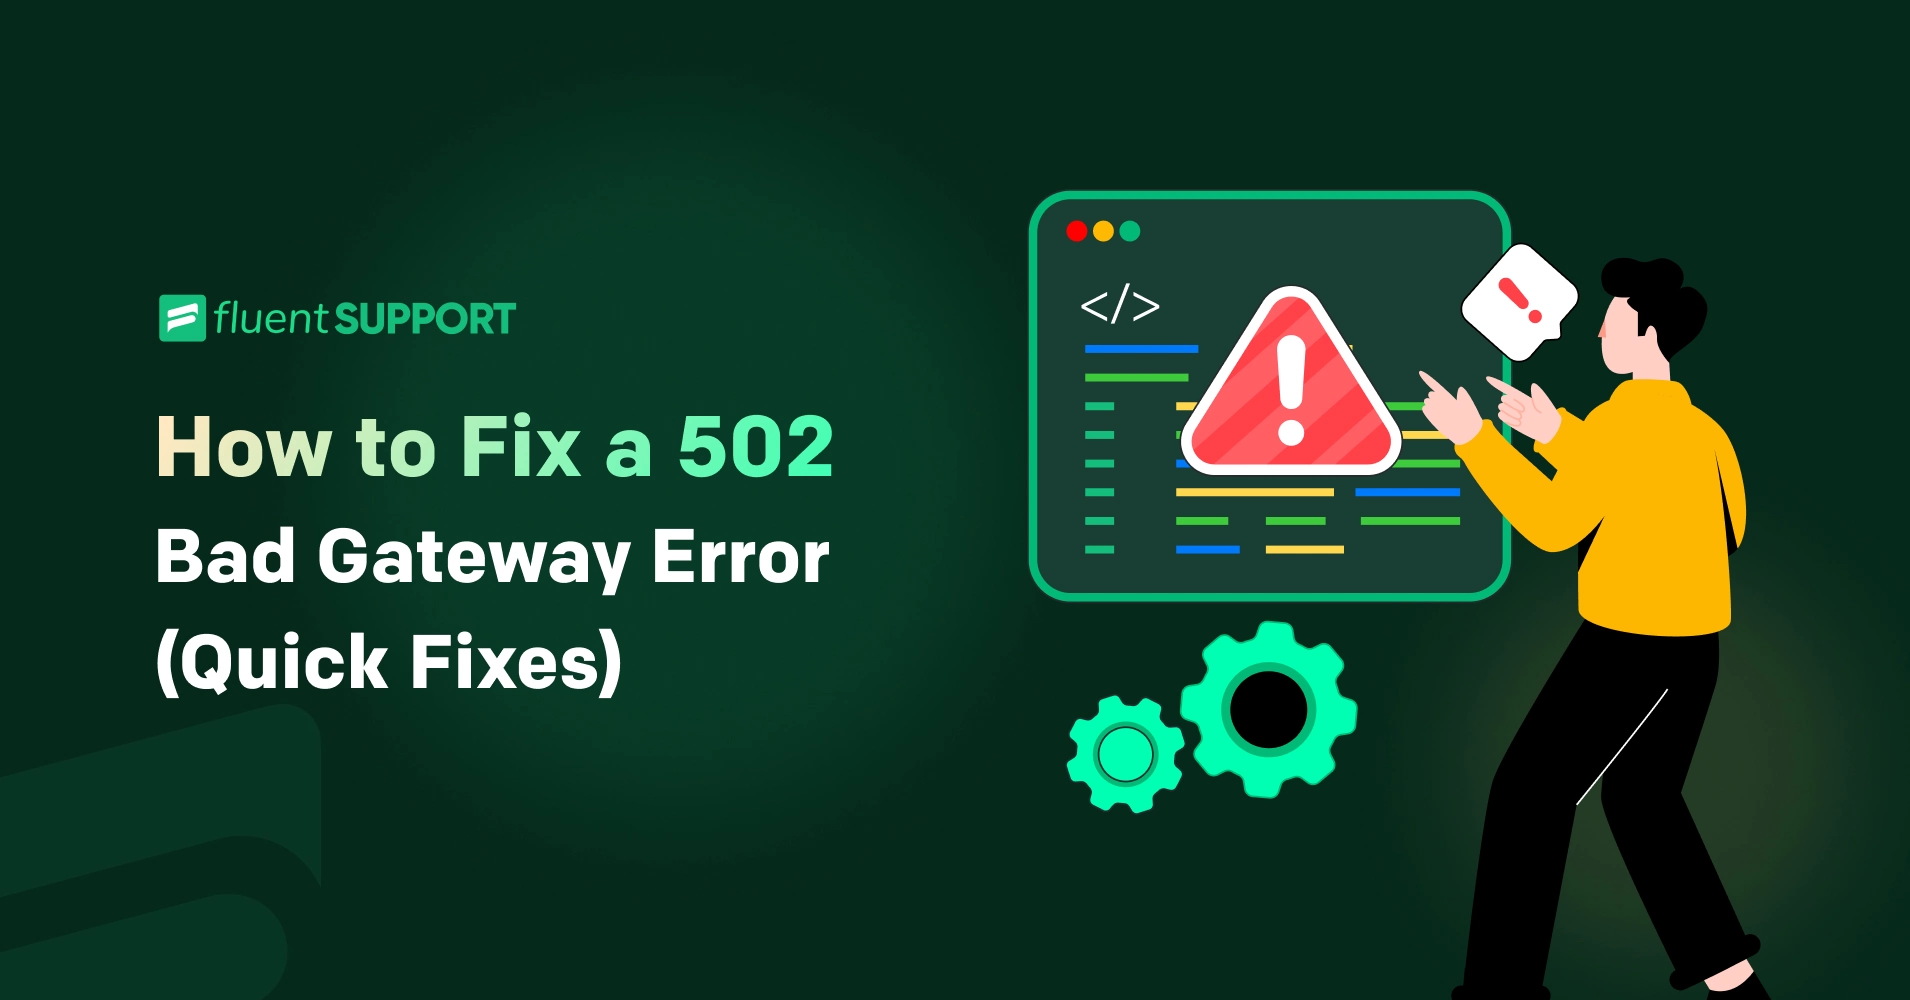 how to fix 502 bad gateway